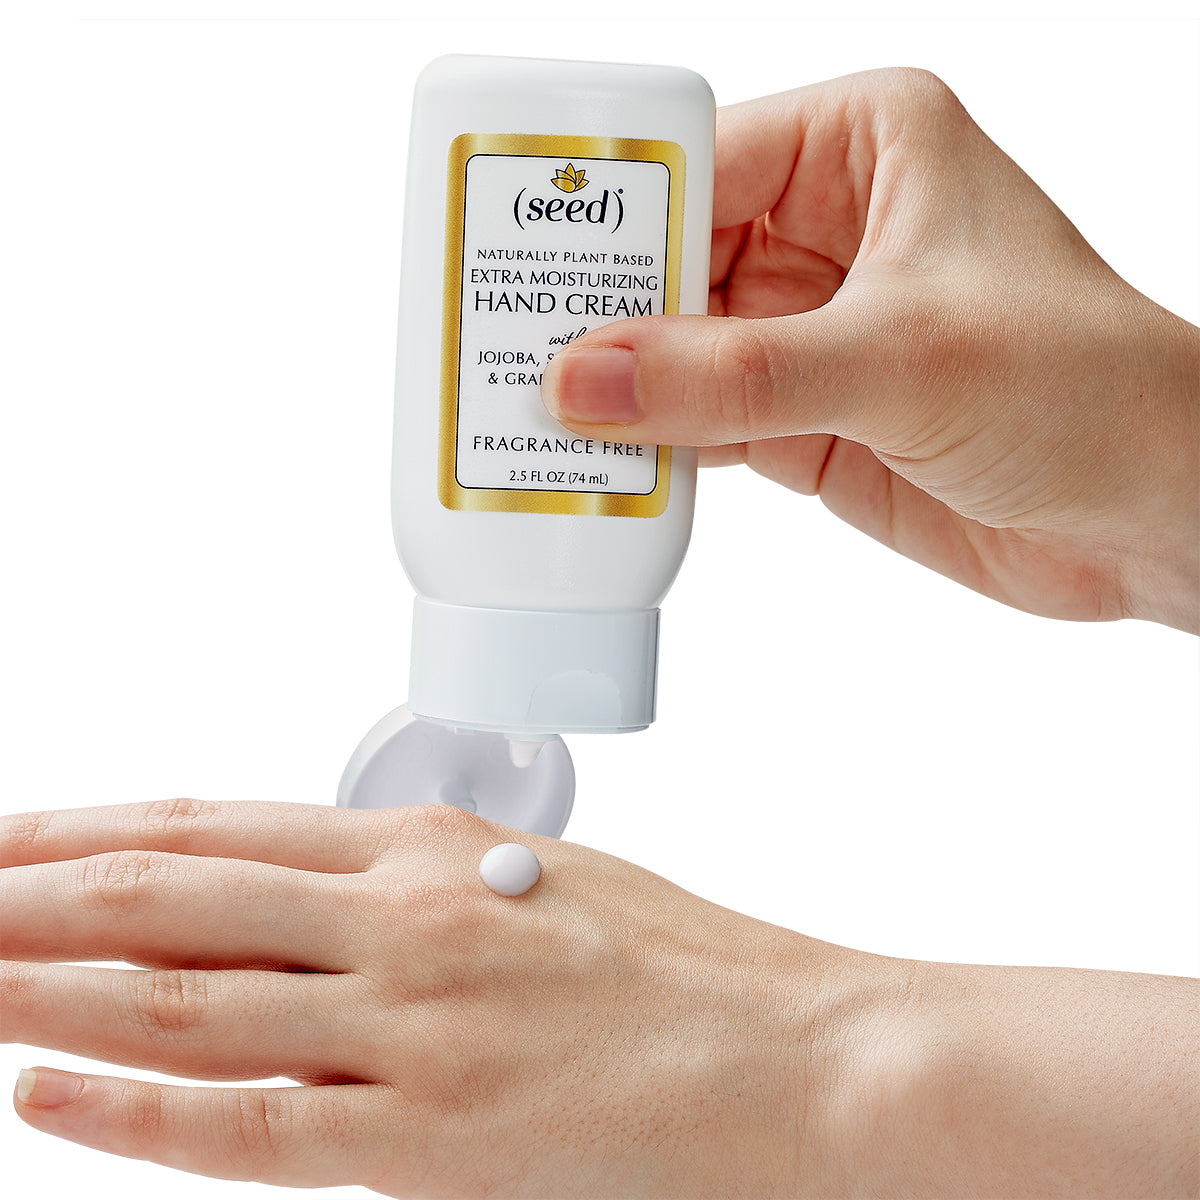 Seed Extra Moisturizing Hand Cream, in use, dispensing